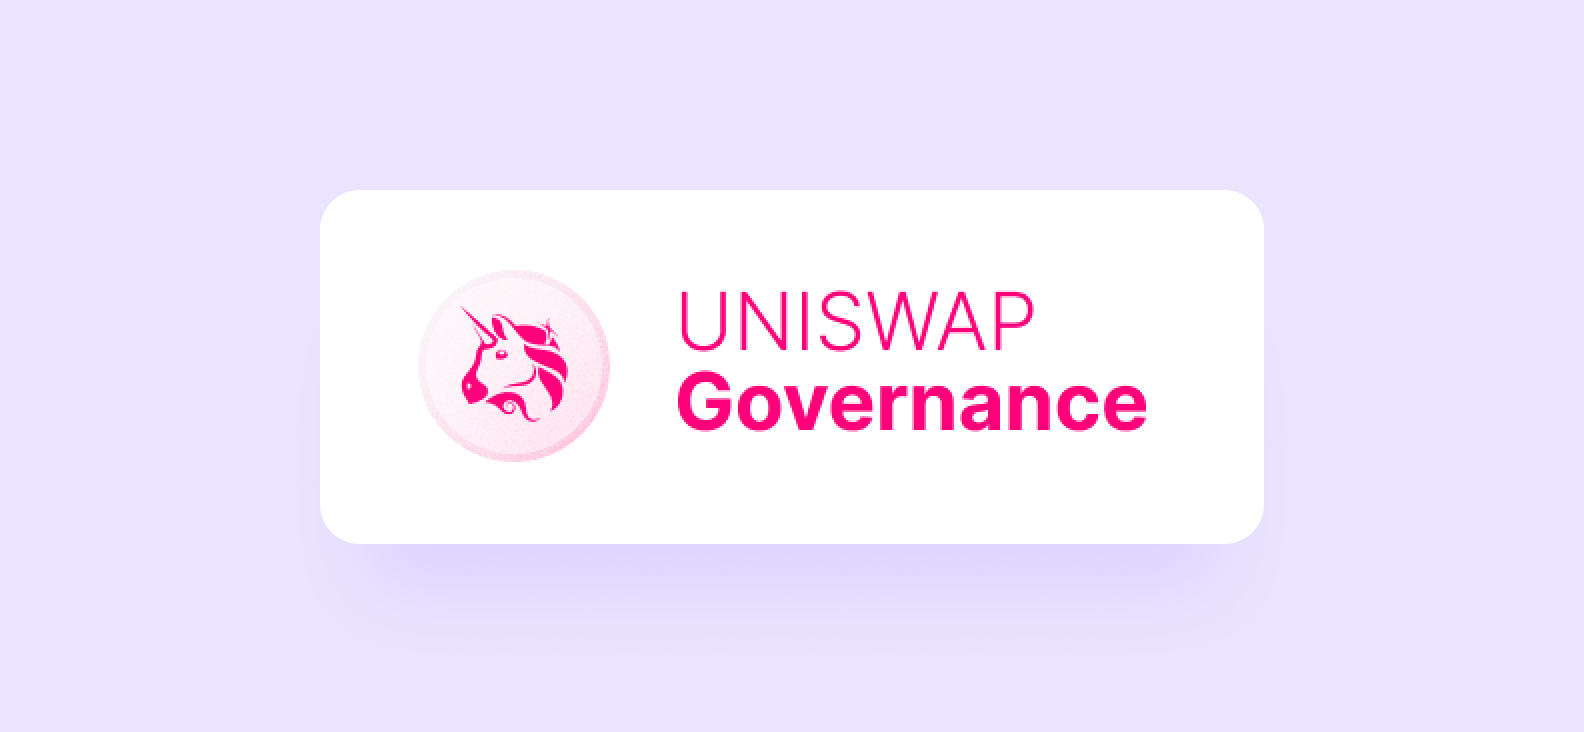 Uniswap Governance is the DAO